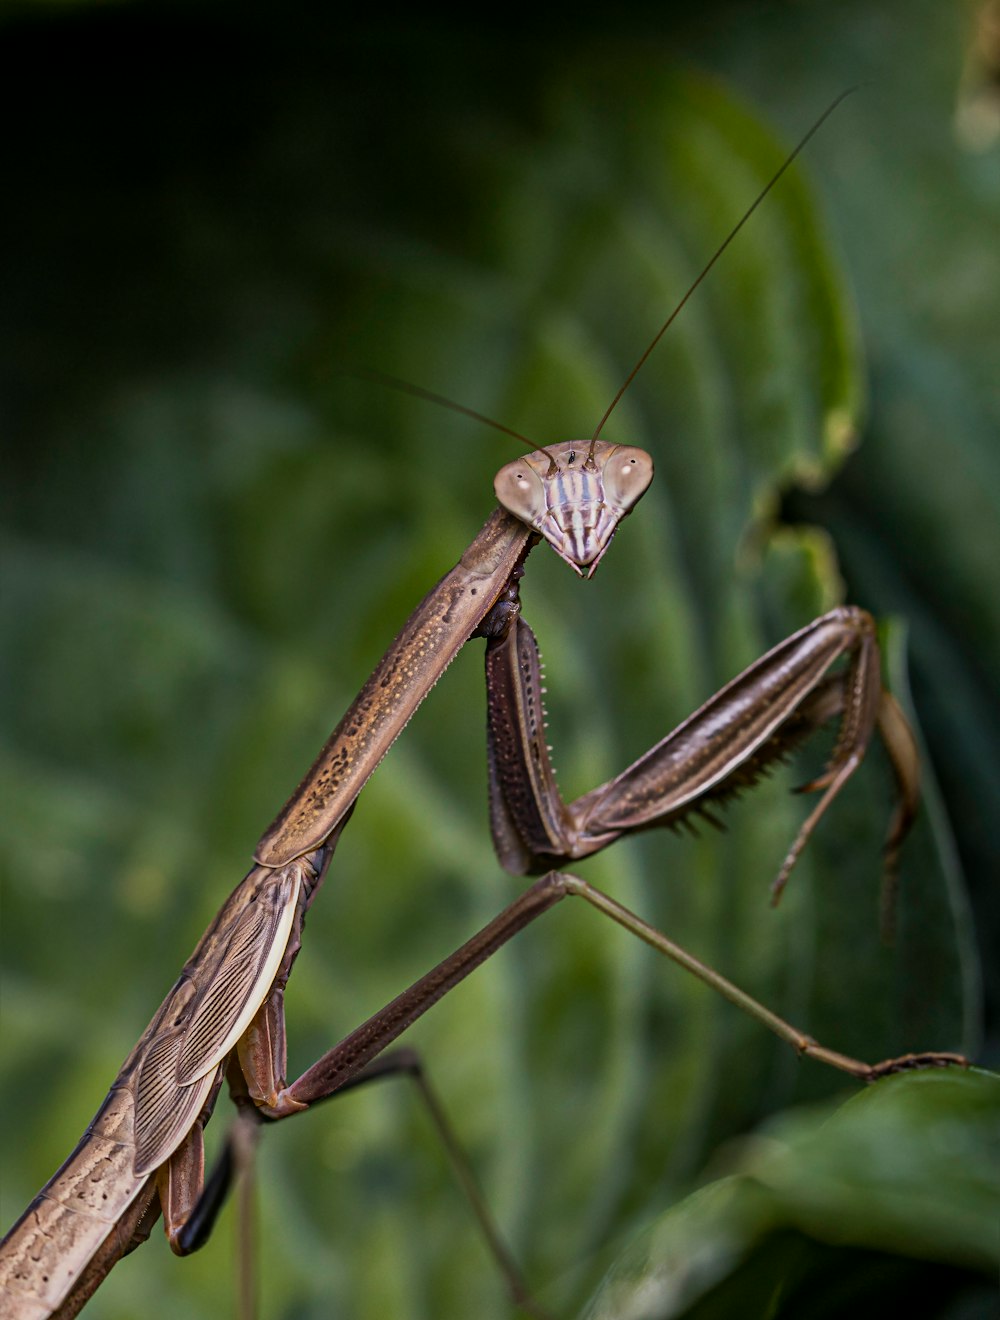 brown praying mantis on green leaf in close up photography during daytime